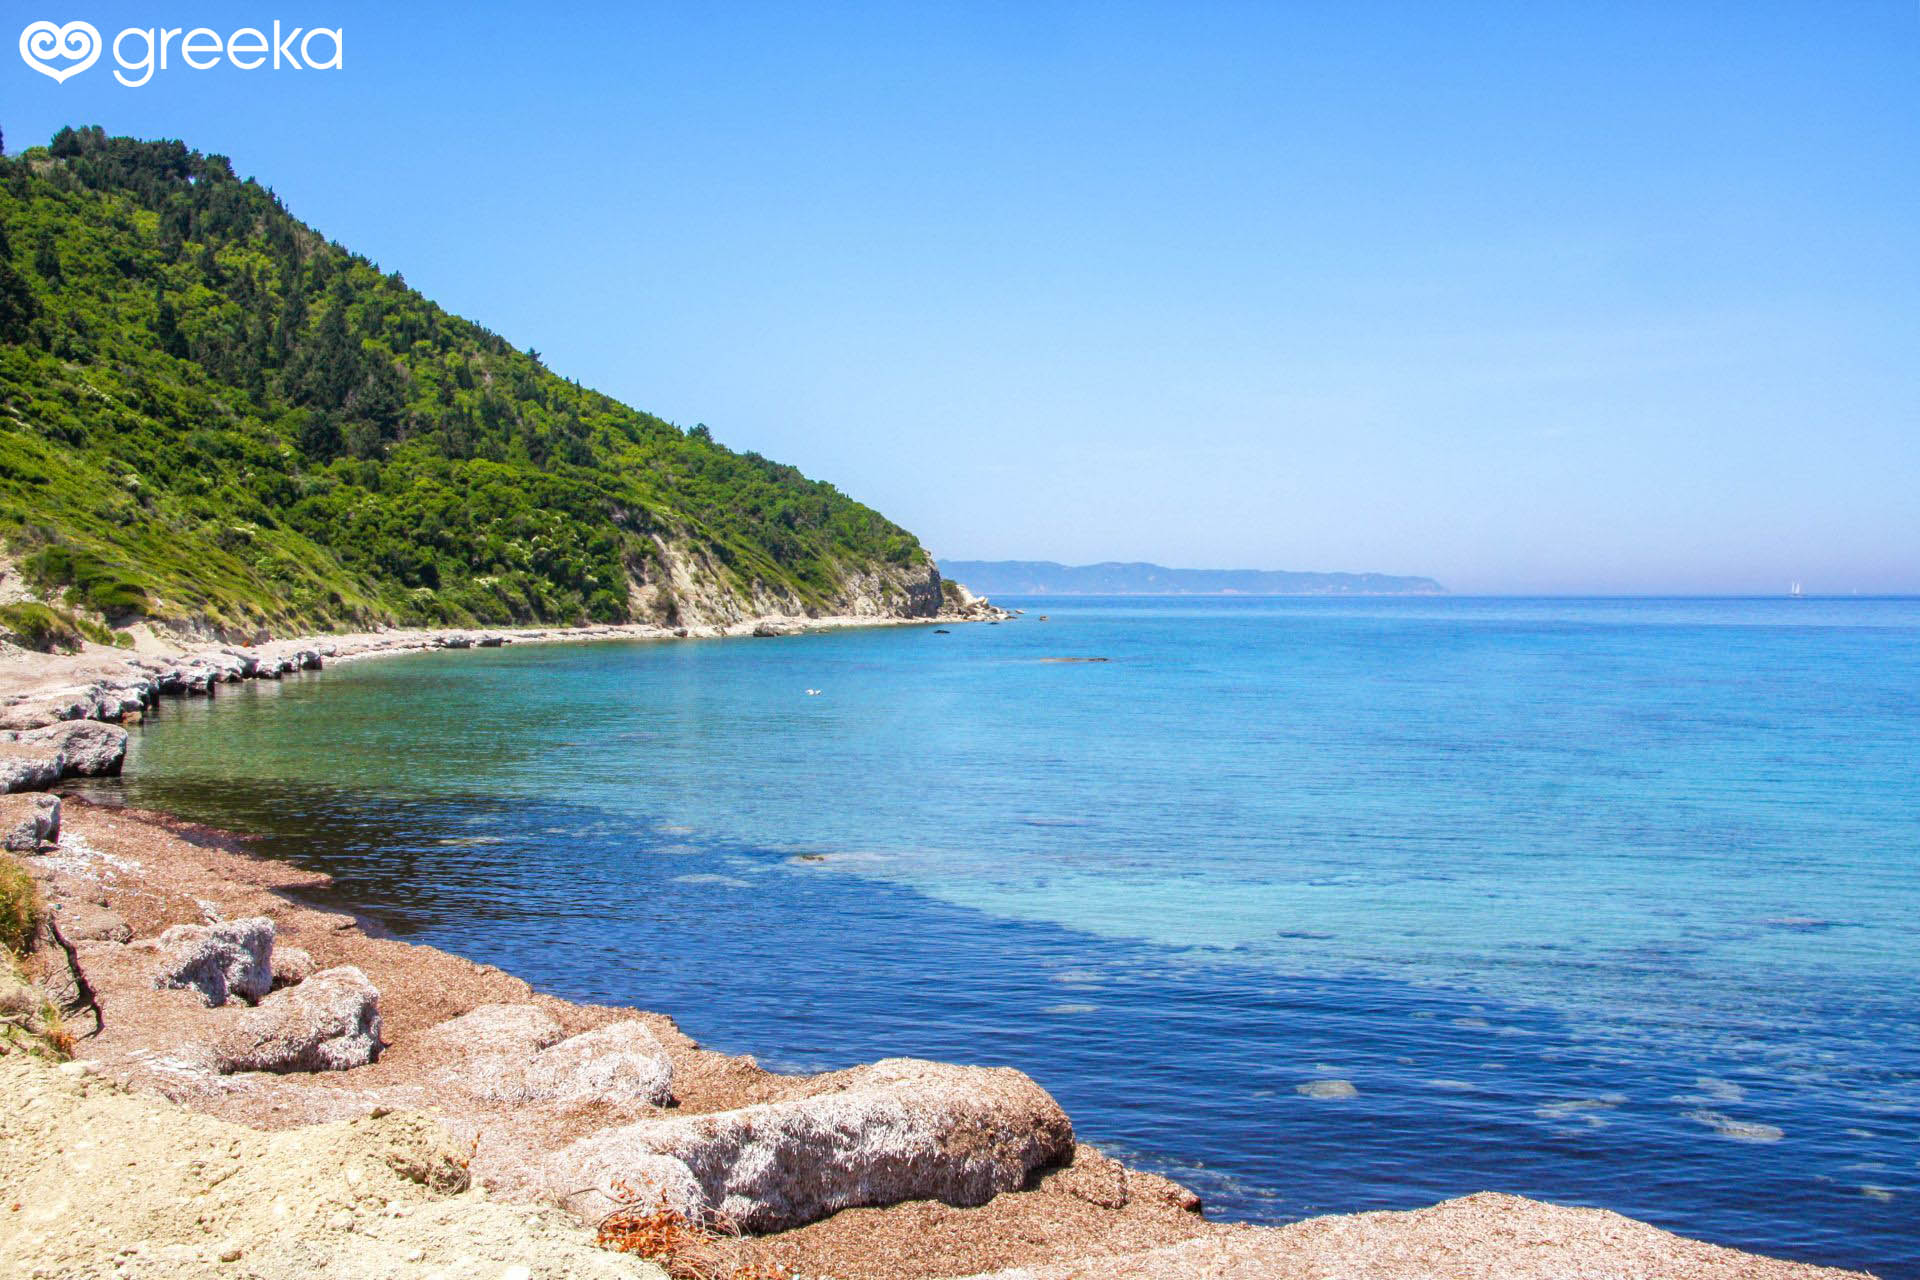 Mathraki Island close to Corfu | Greeka